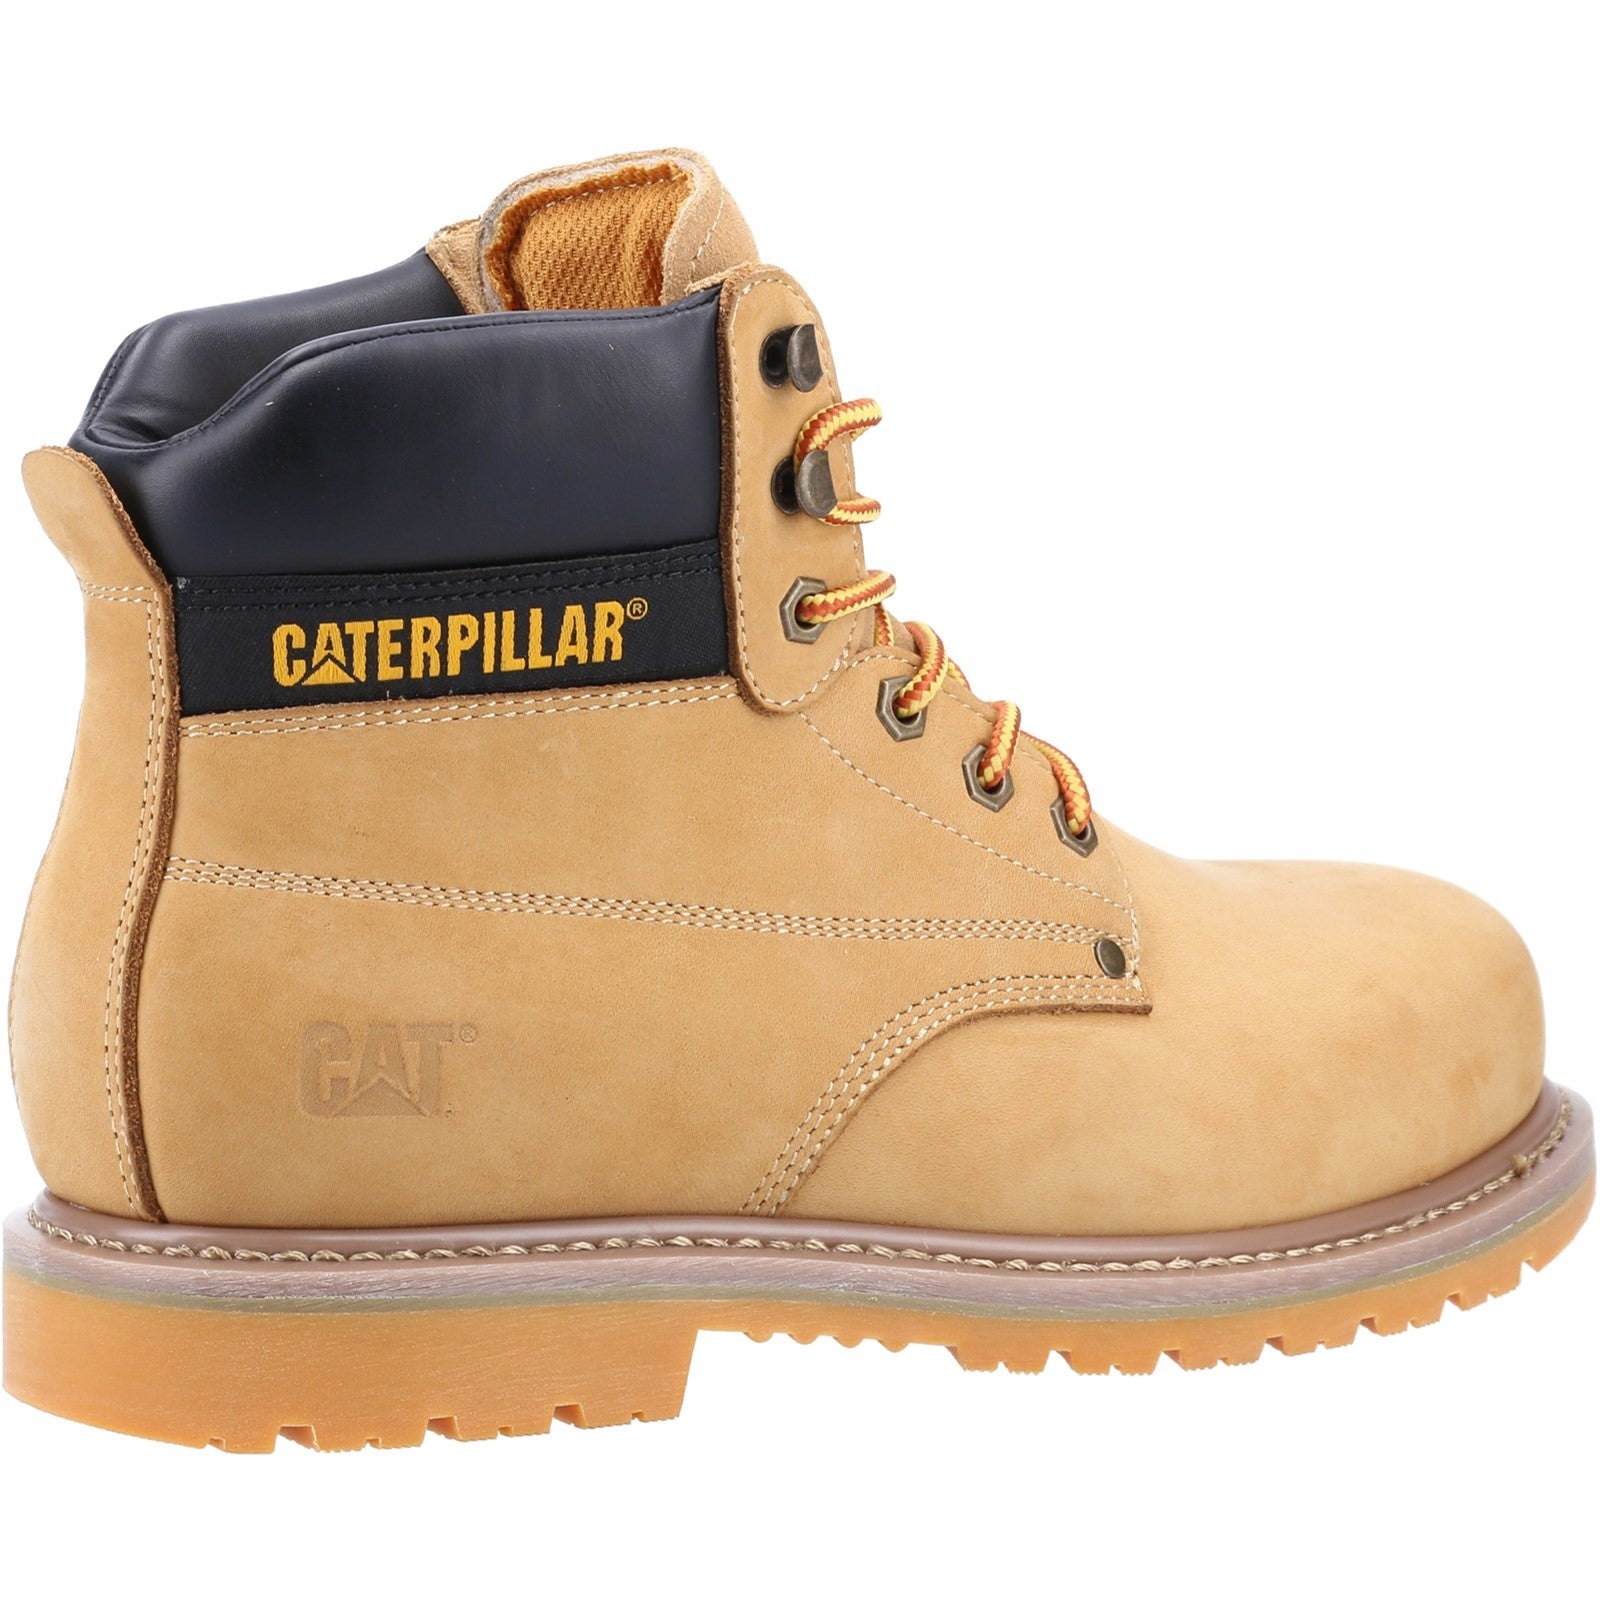 Caterpillar Powerplant S3 GYW Safety Boot